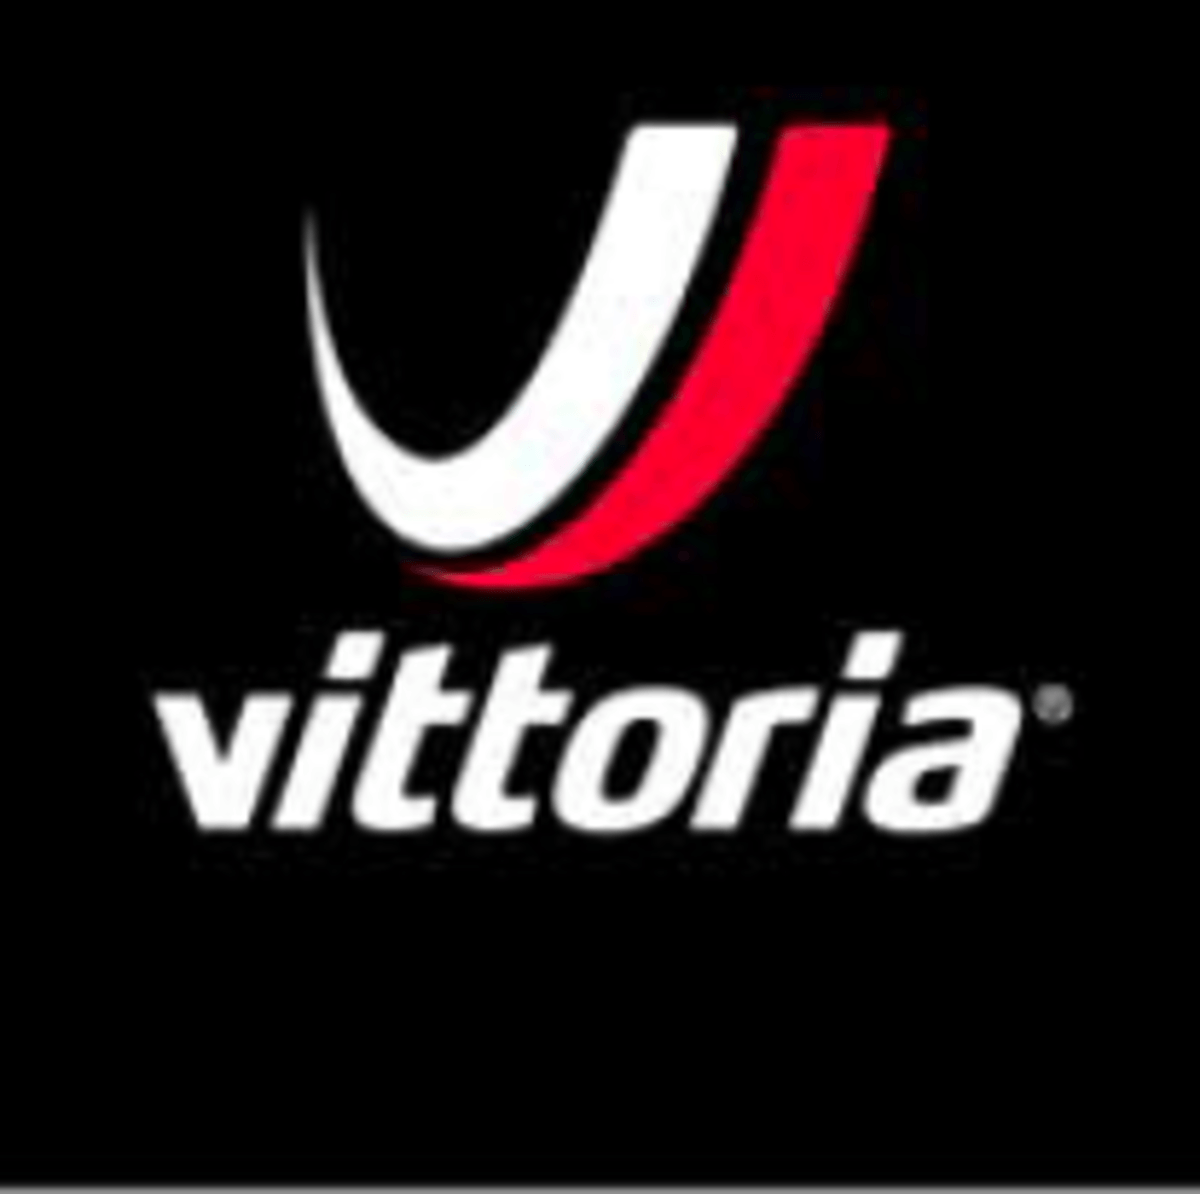 Vittoria Logo - Vittoria badge to replace Geax logo on all tyres - BikeBiz